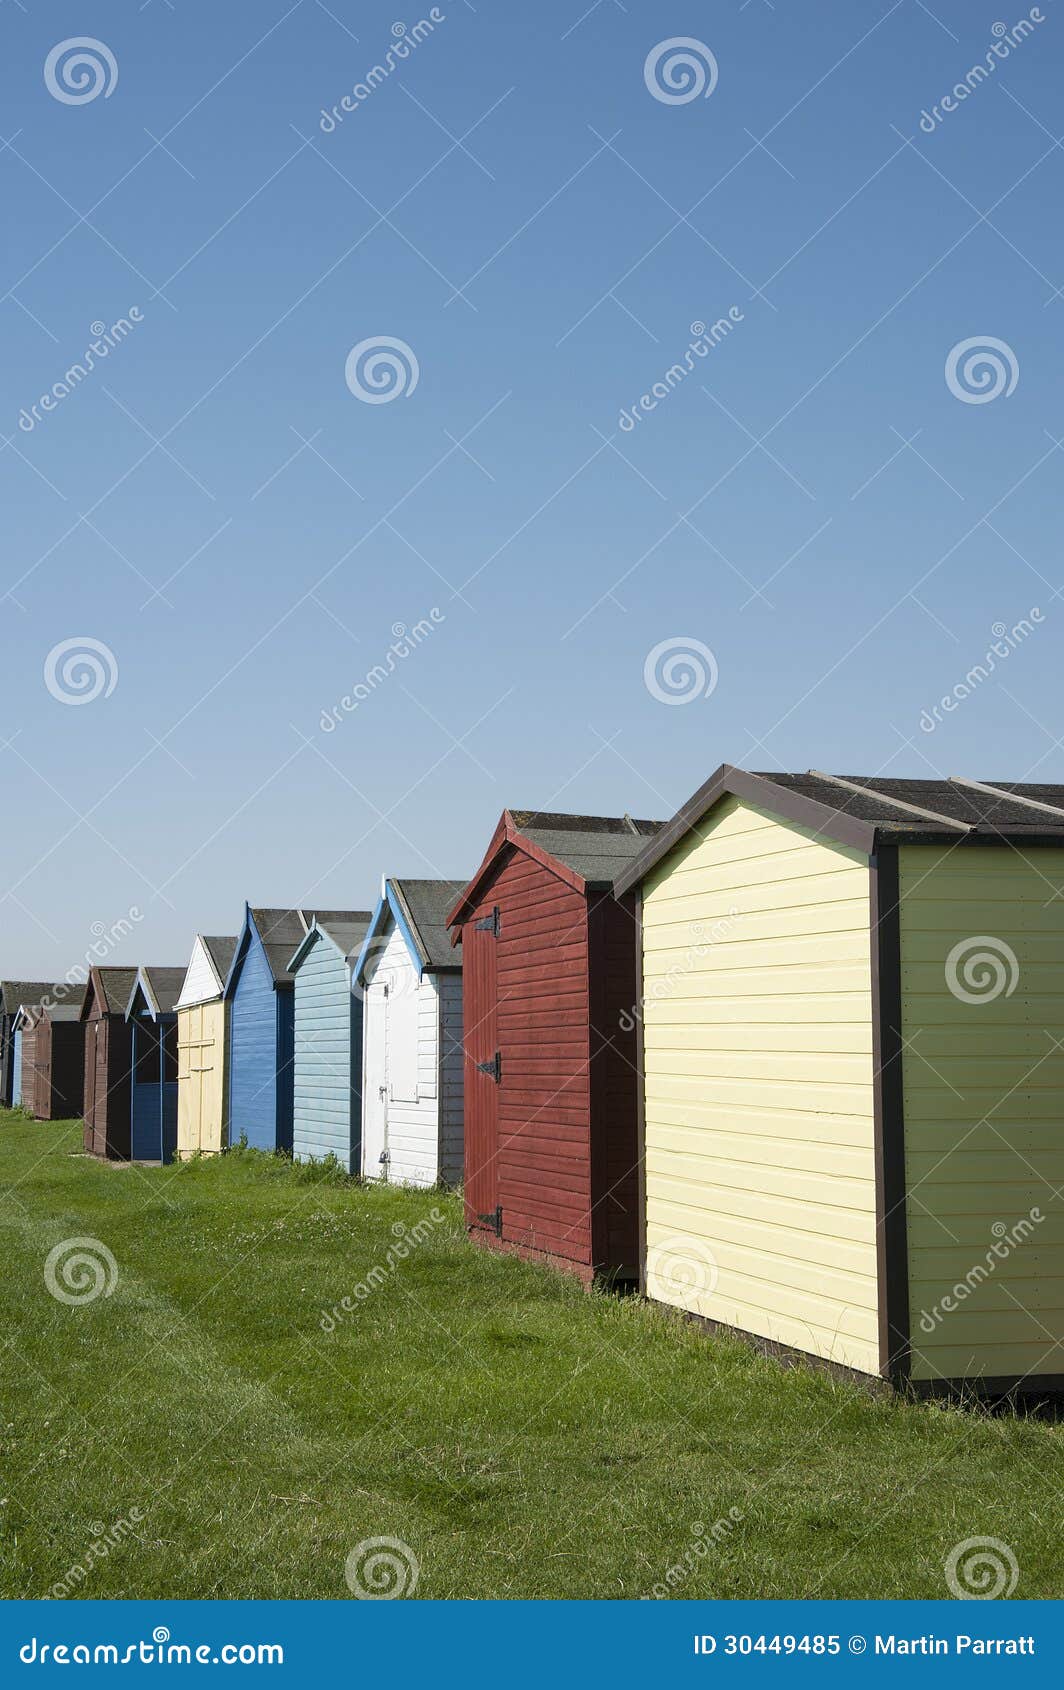 beach huts at dovercourt, near harwich, essex, uk.